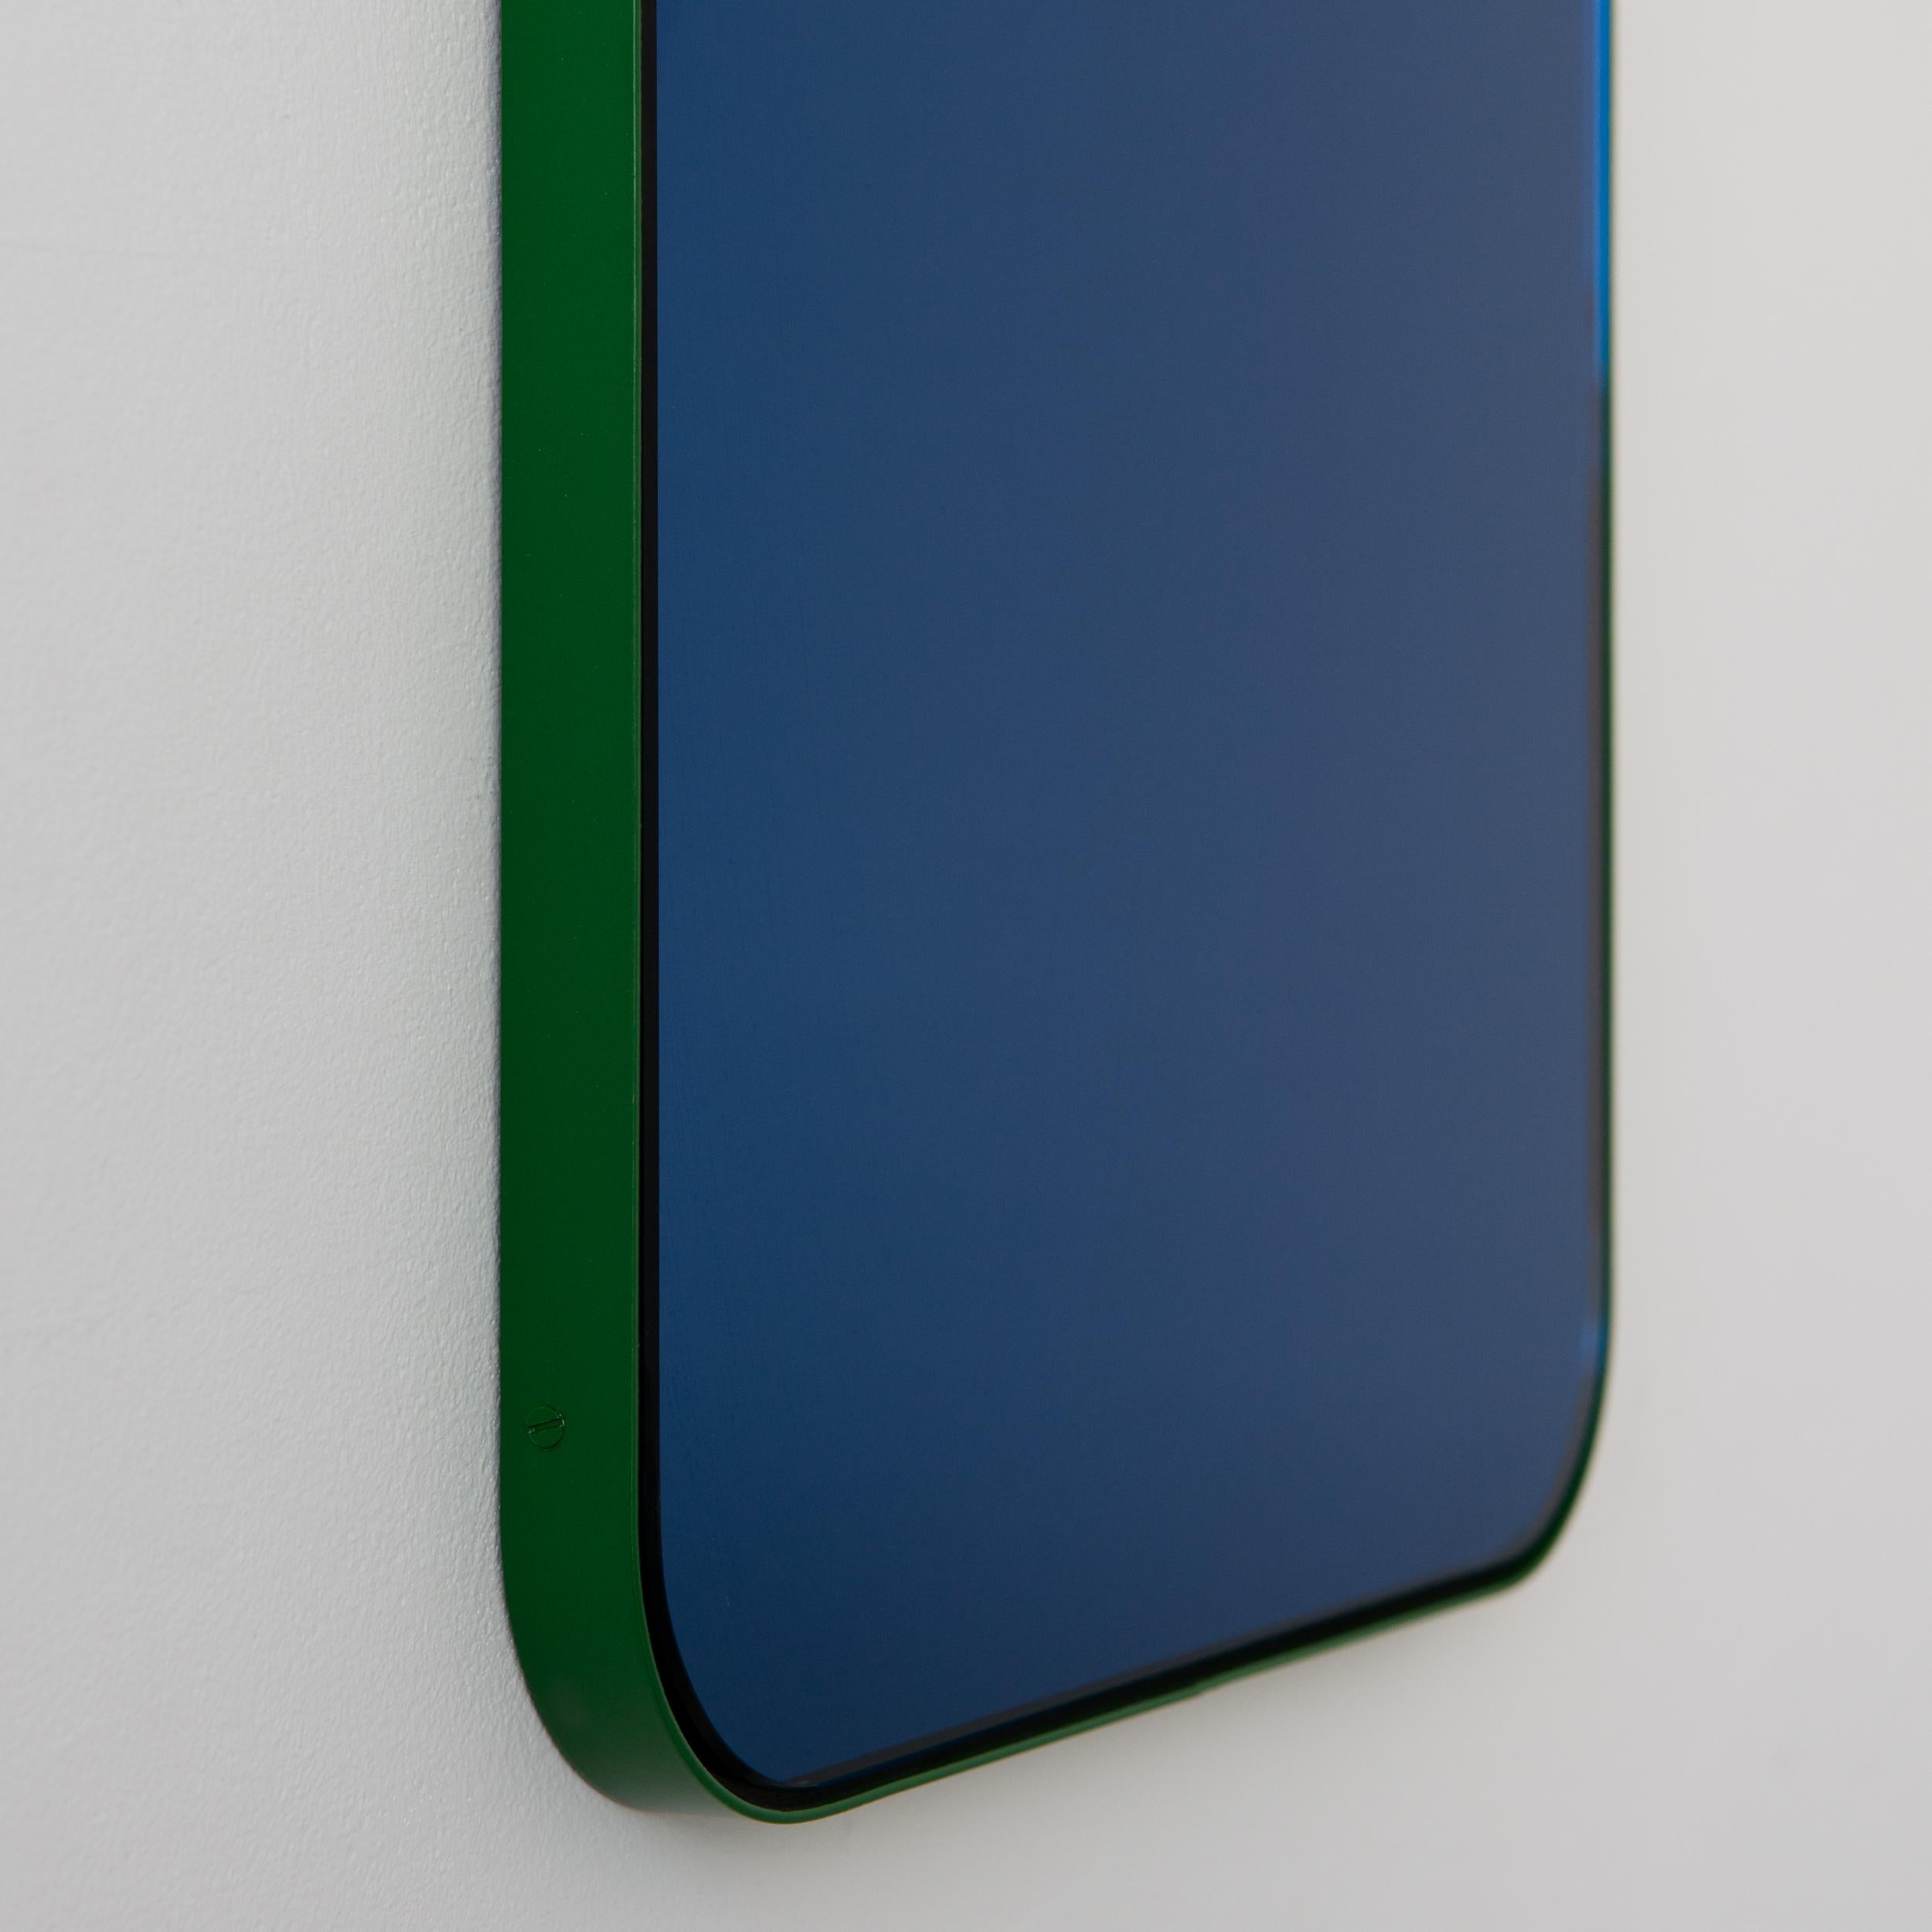 Britannique Quadris Miroir rectangulaire contemporain bleu avec cadre Modernity Greene & Greene, large en vente